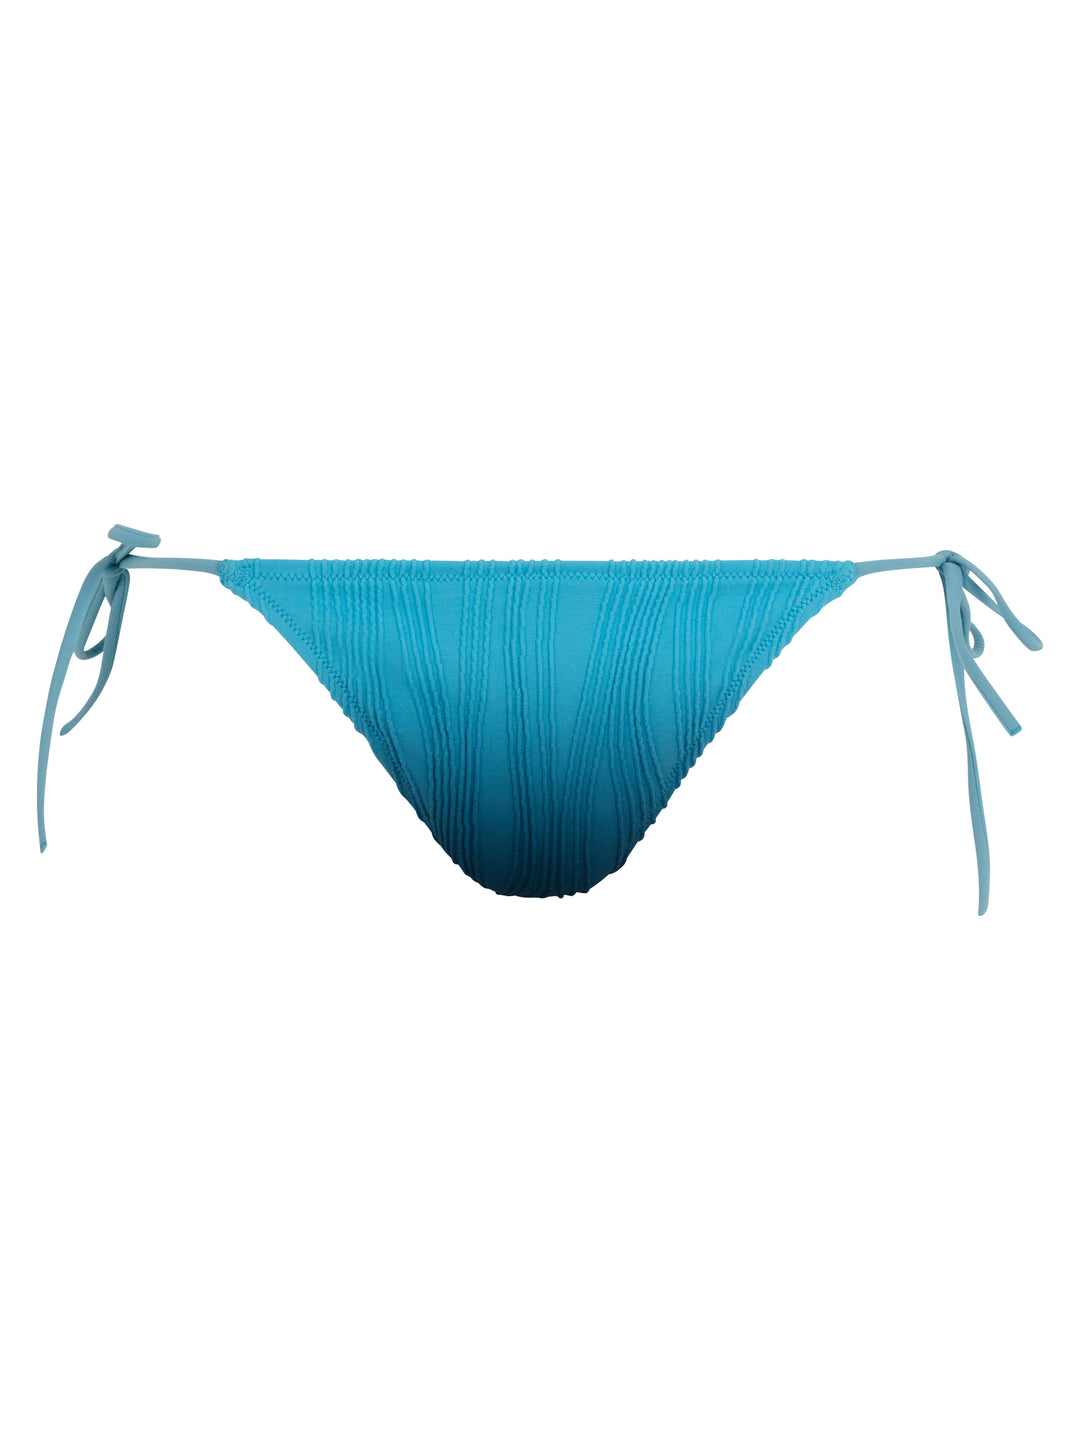 Chantelle Swimwear - Swim One Size Bikini Blue tie & dye